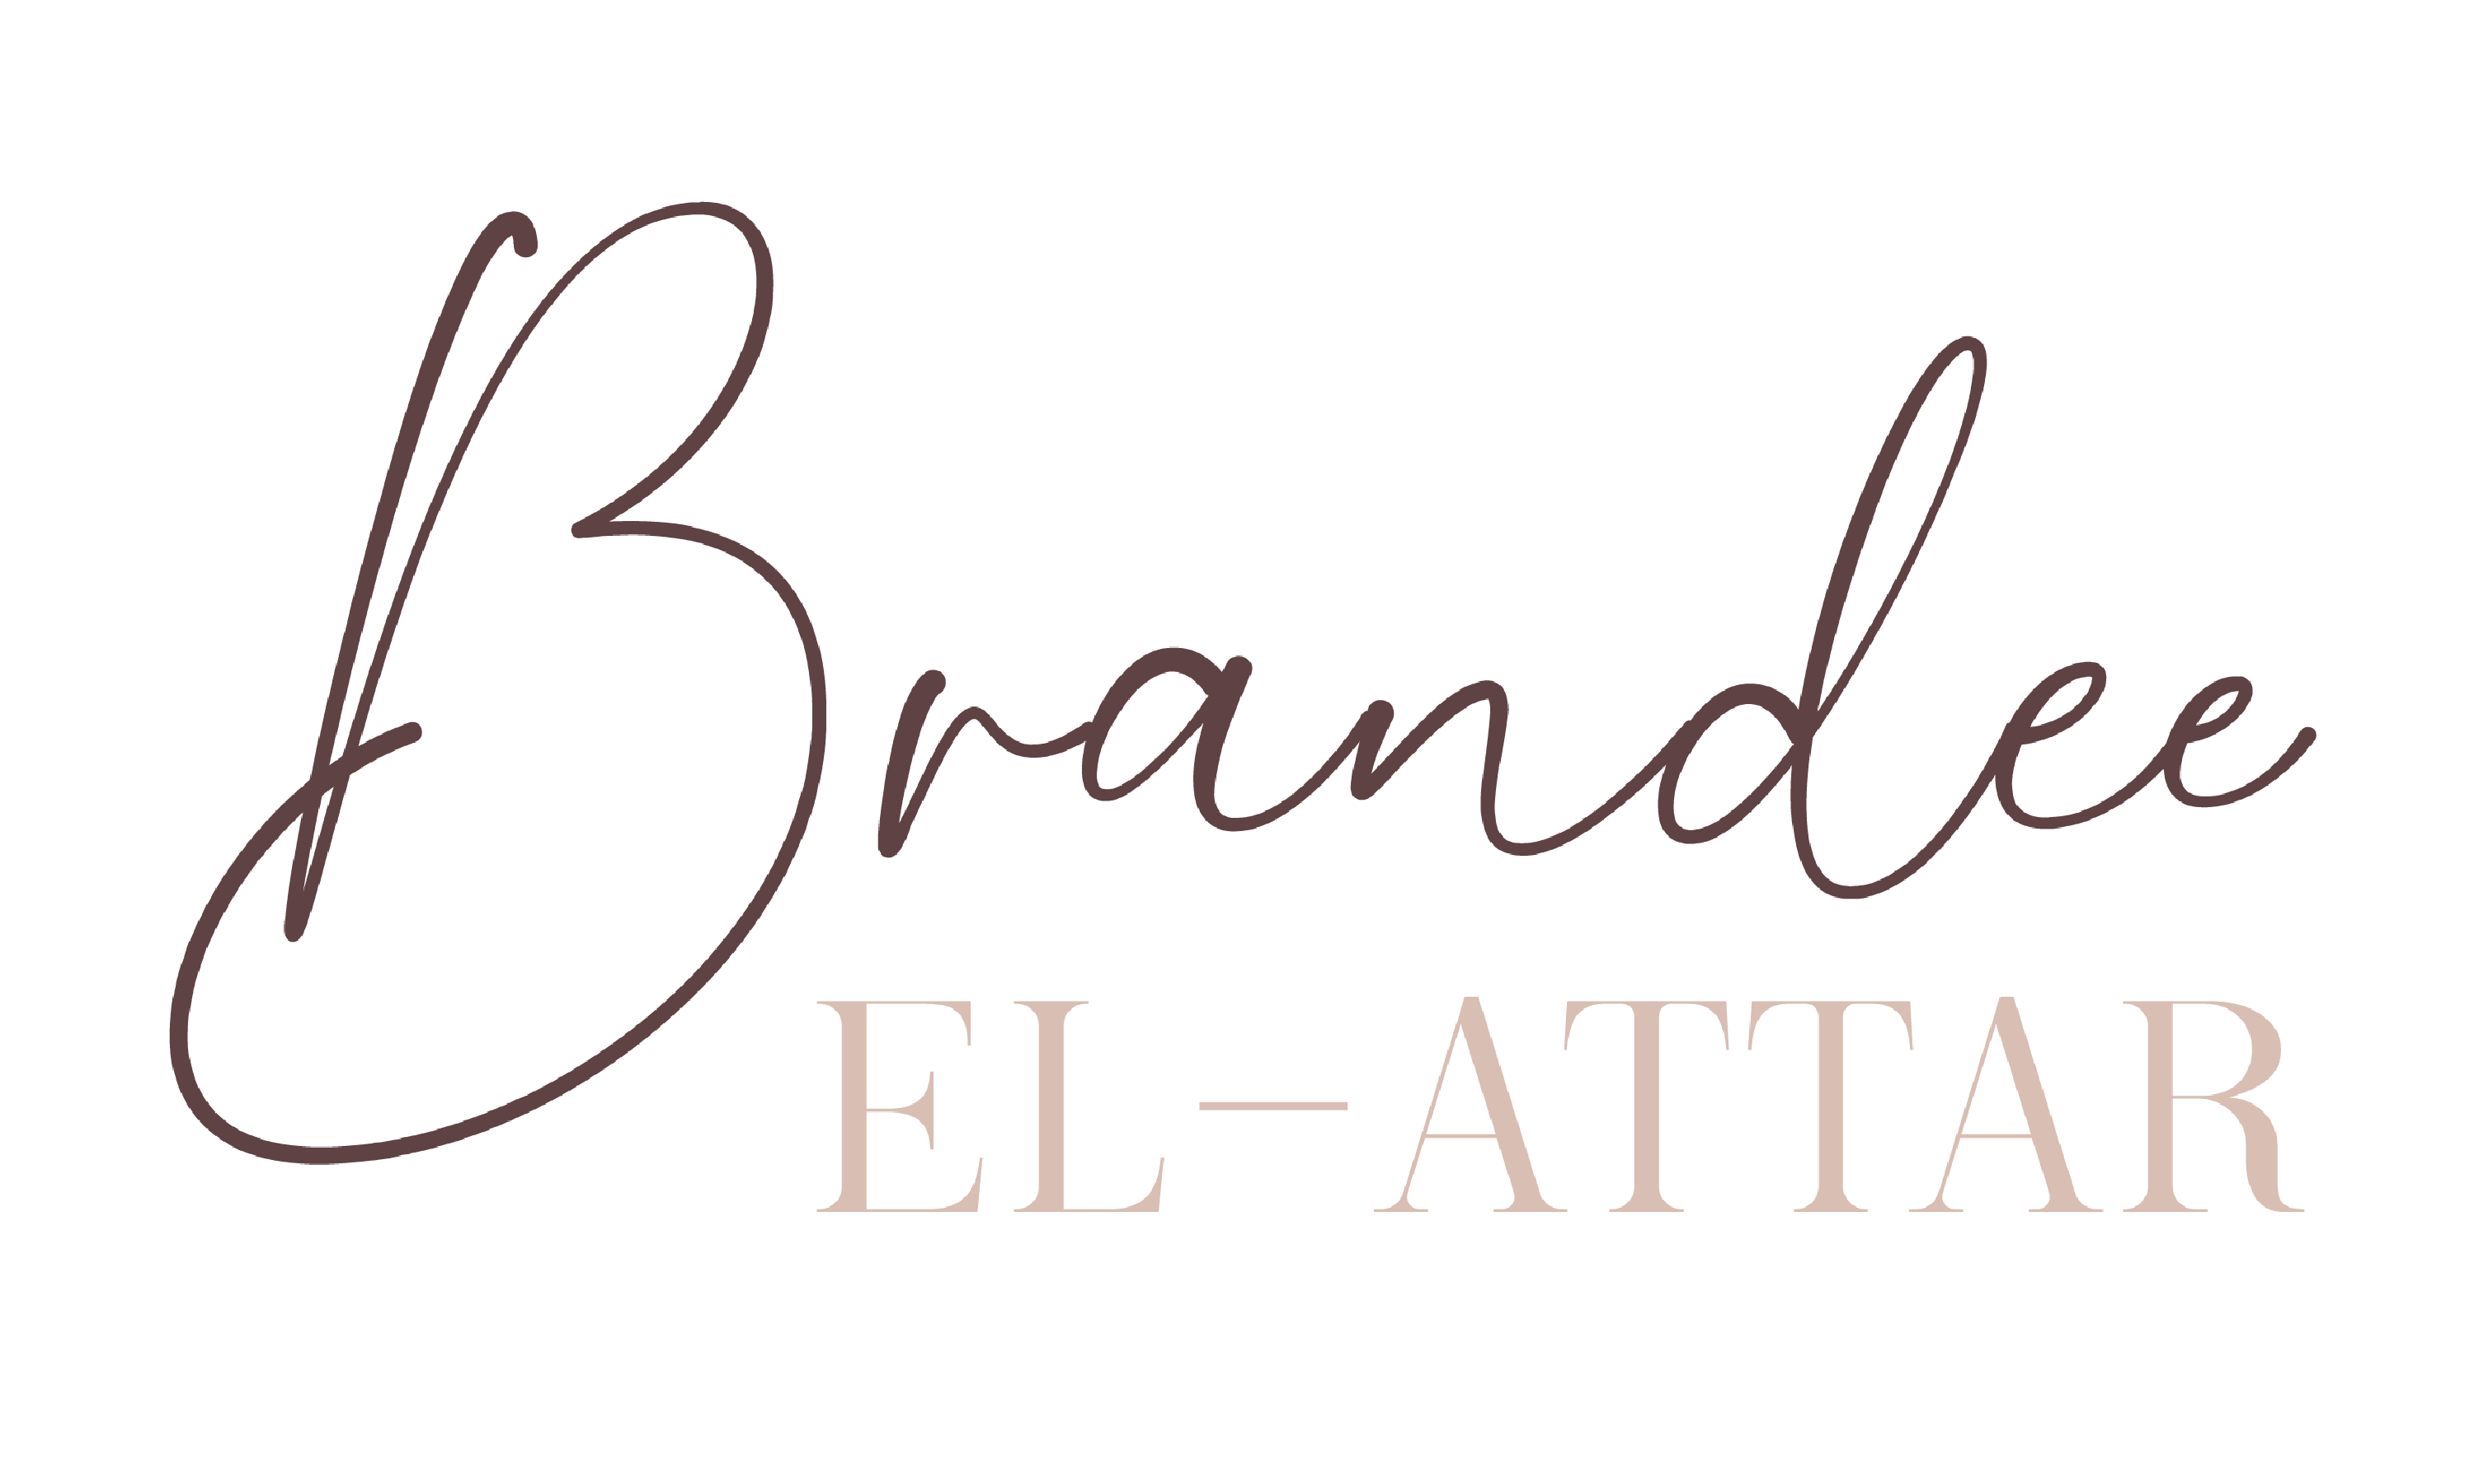 Brandee El-Attar